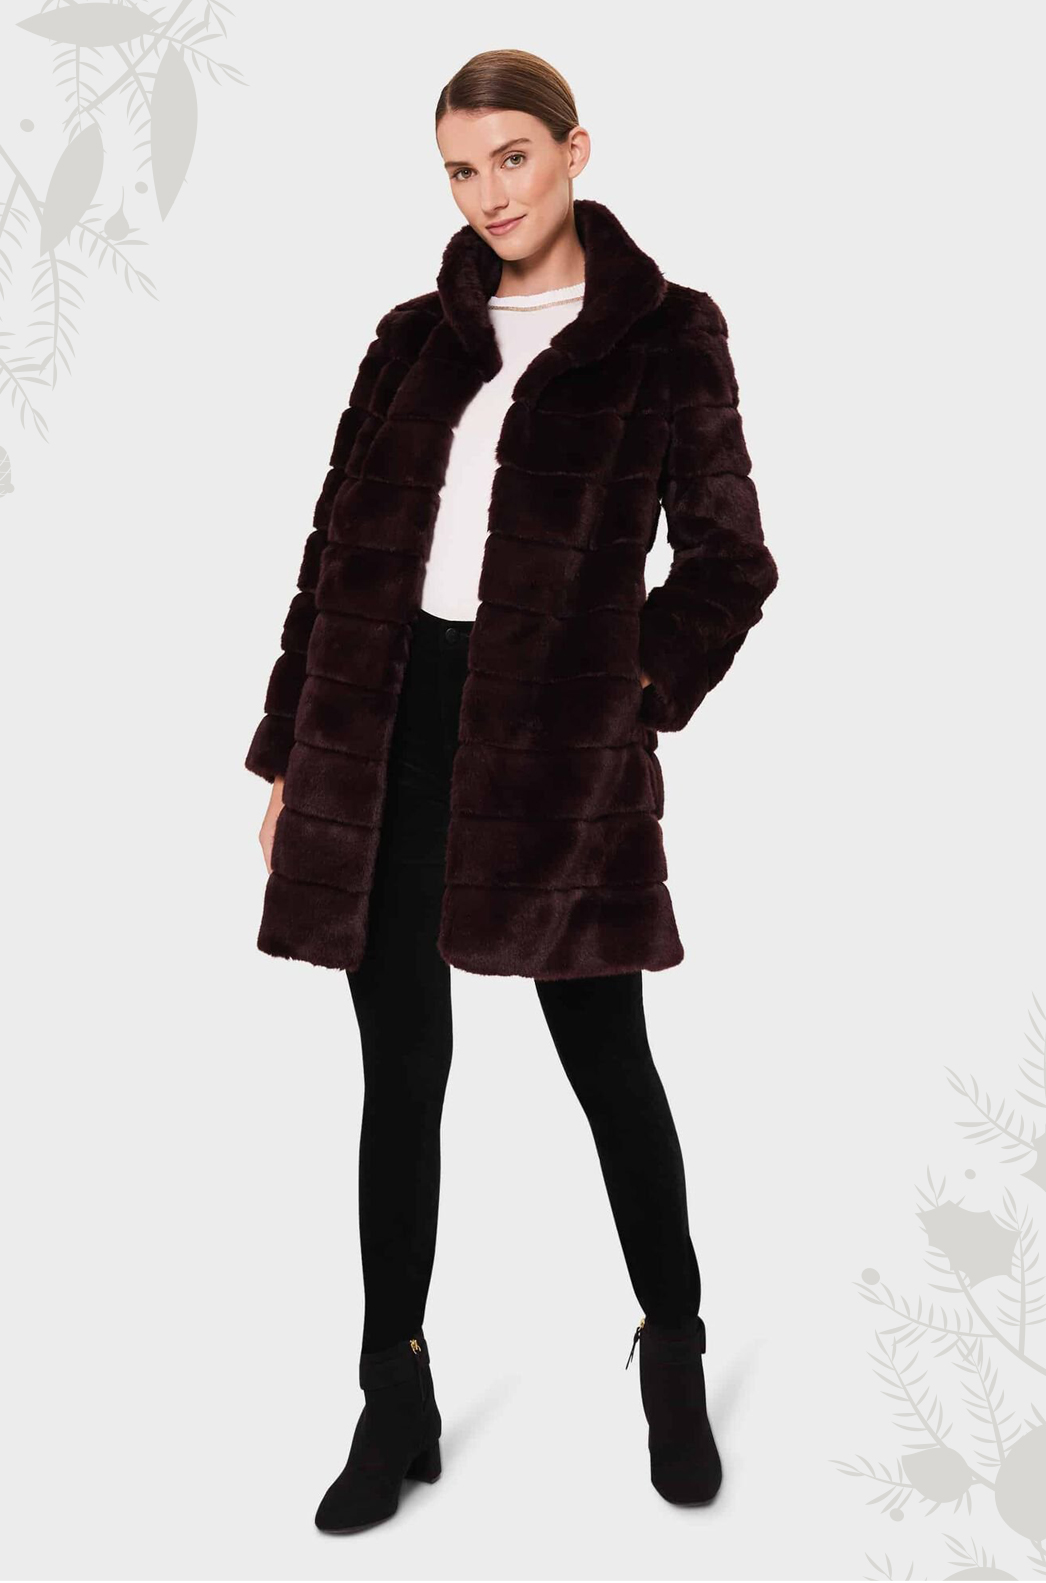 Model photographed wearing a dark burgundy faux fur coat.